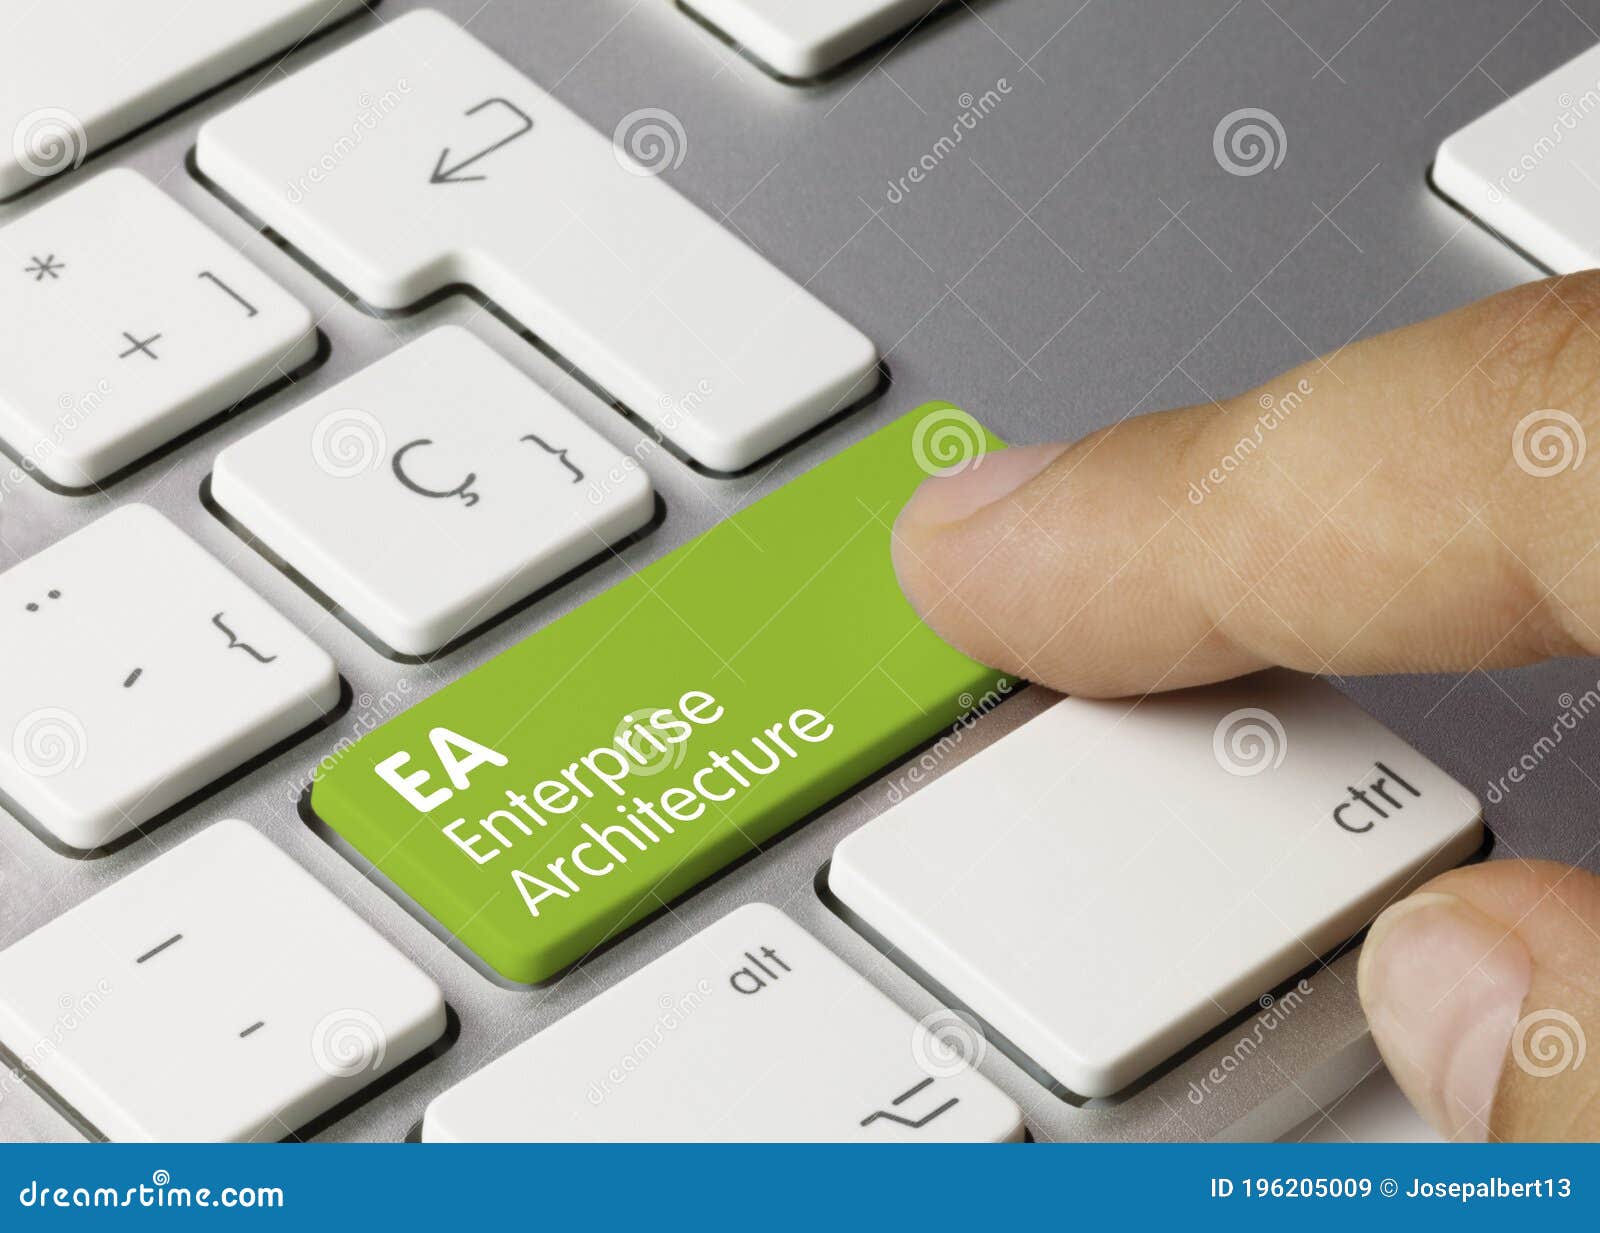 ea enterprise architecture - inscription on green keyboard key